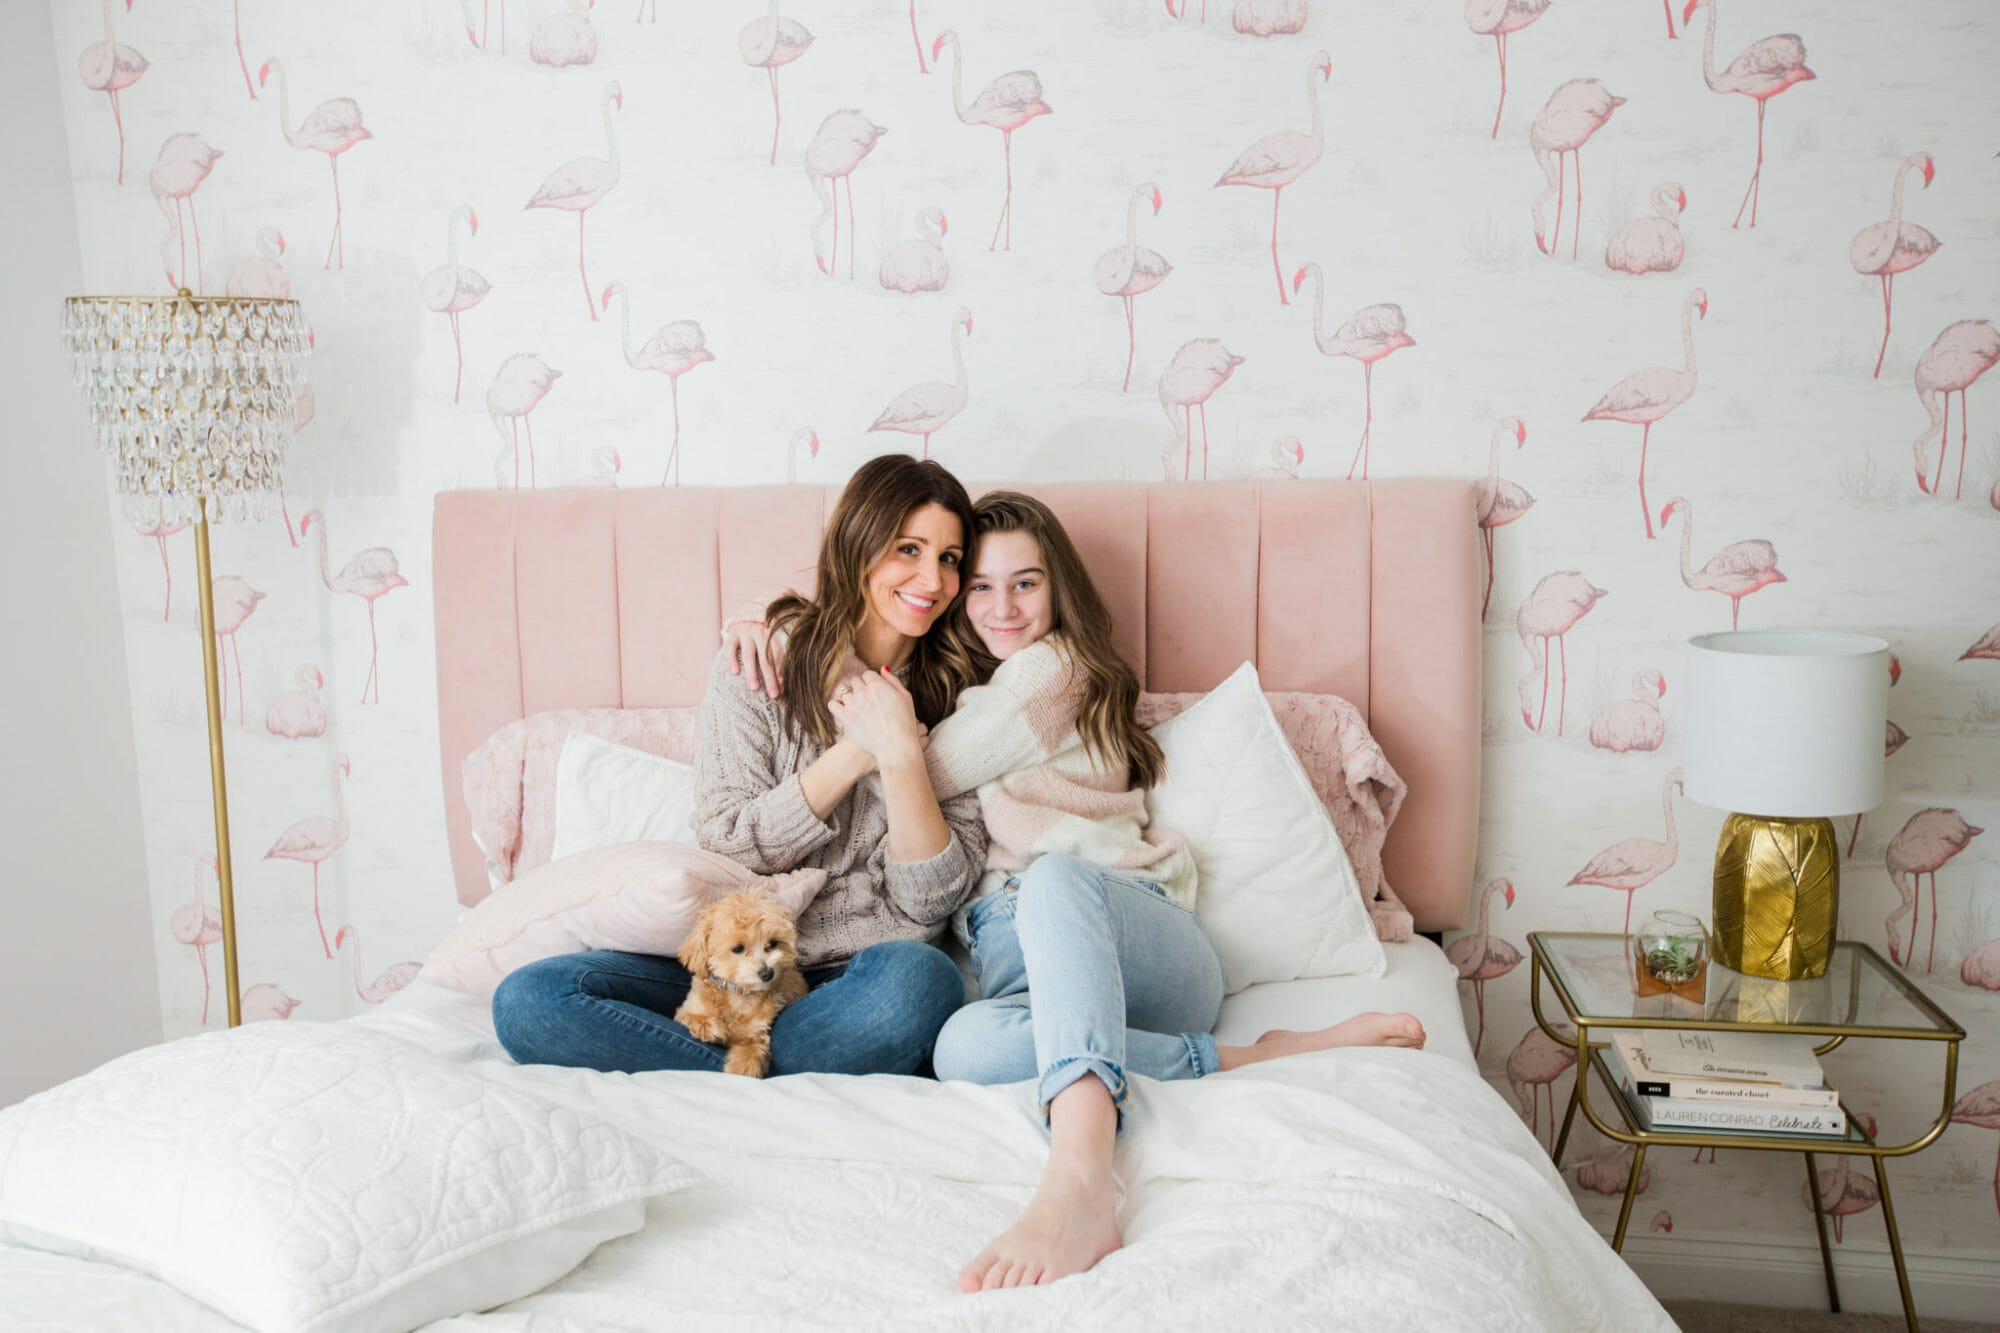 Teen Girl Bedroom Ideas | how to decorate a teen bedroom | feminine teen bedroom decor || JennyCookies.com #teenroom #bedroomdecor #femininebedroom #homedecor #jennycookies